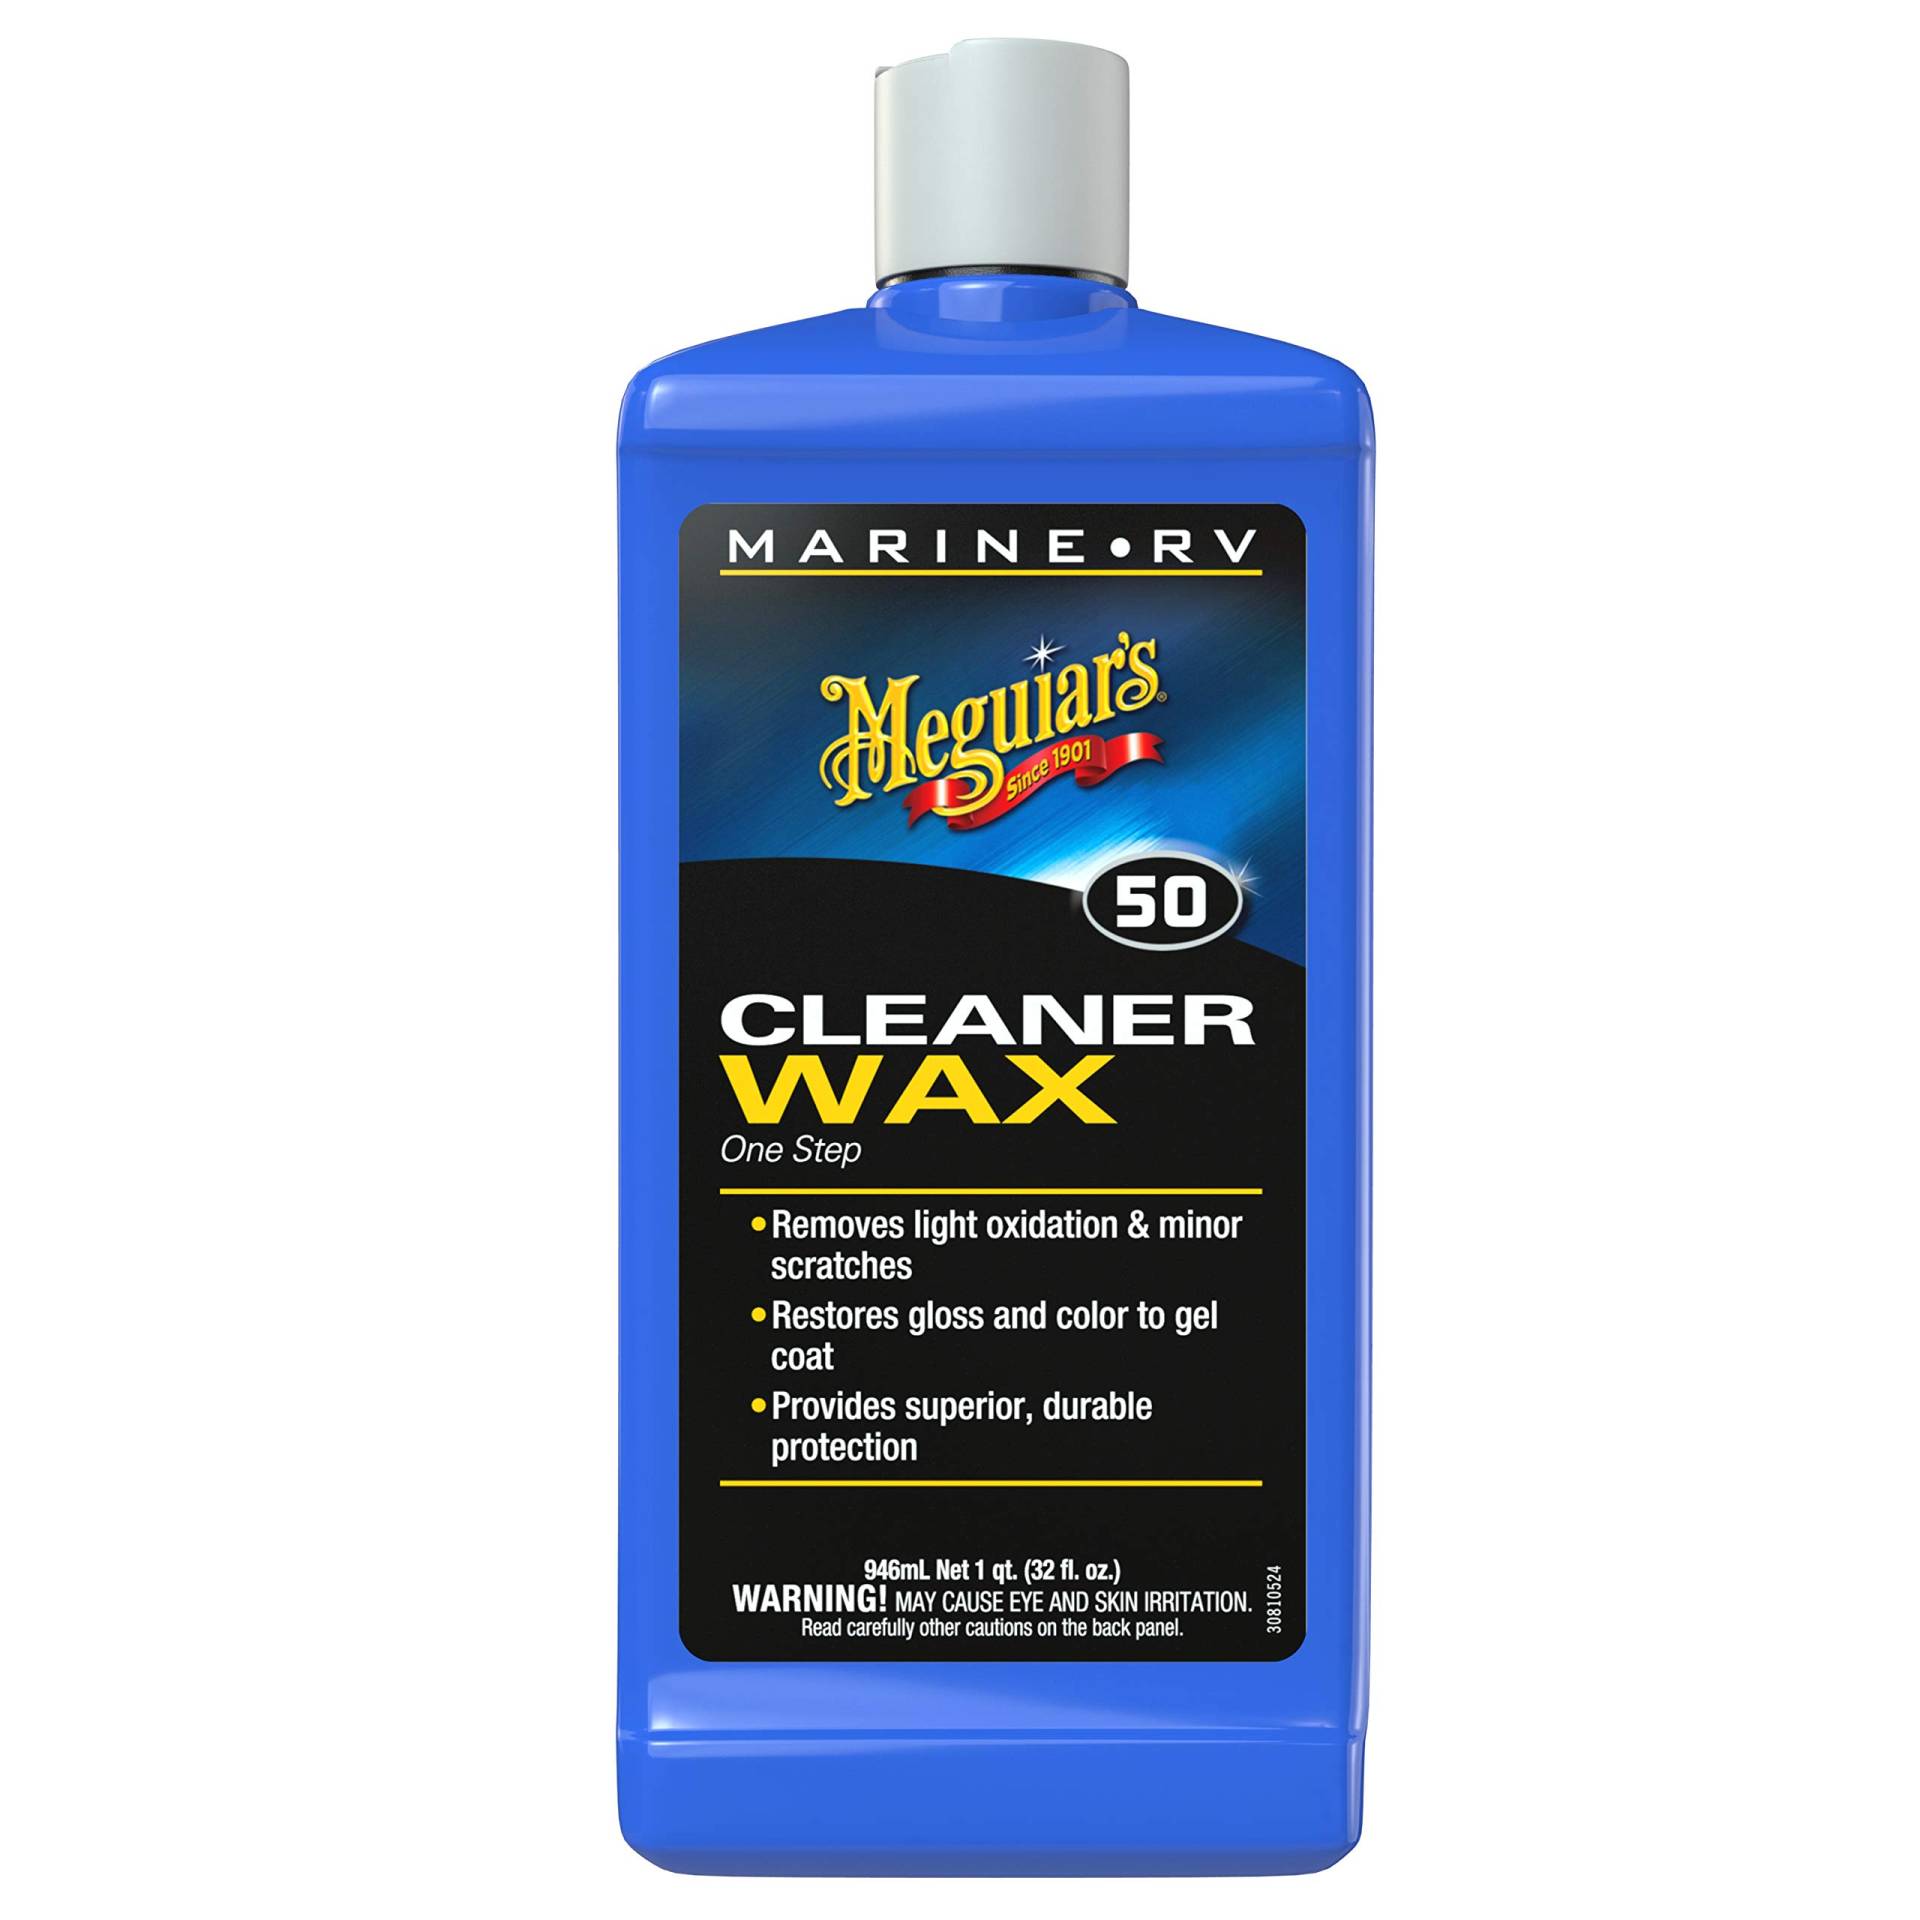 Meguiar's M5032 Marine RV Cleaner Wax One Step liquid Wachs, 945ml von Meguiar's